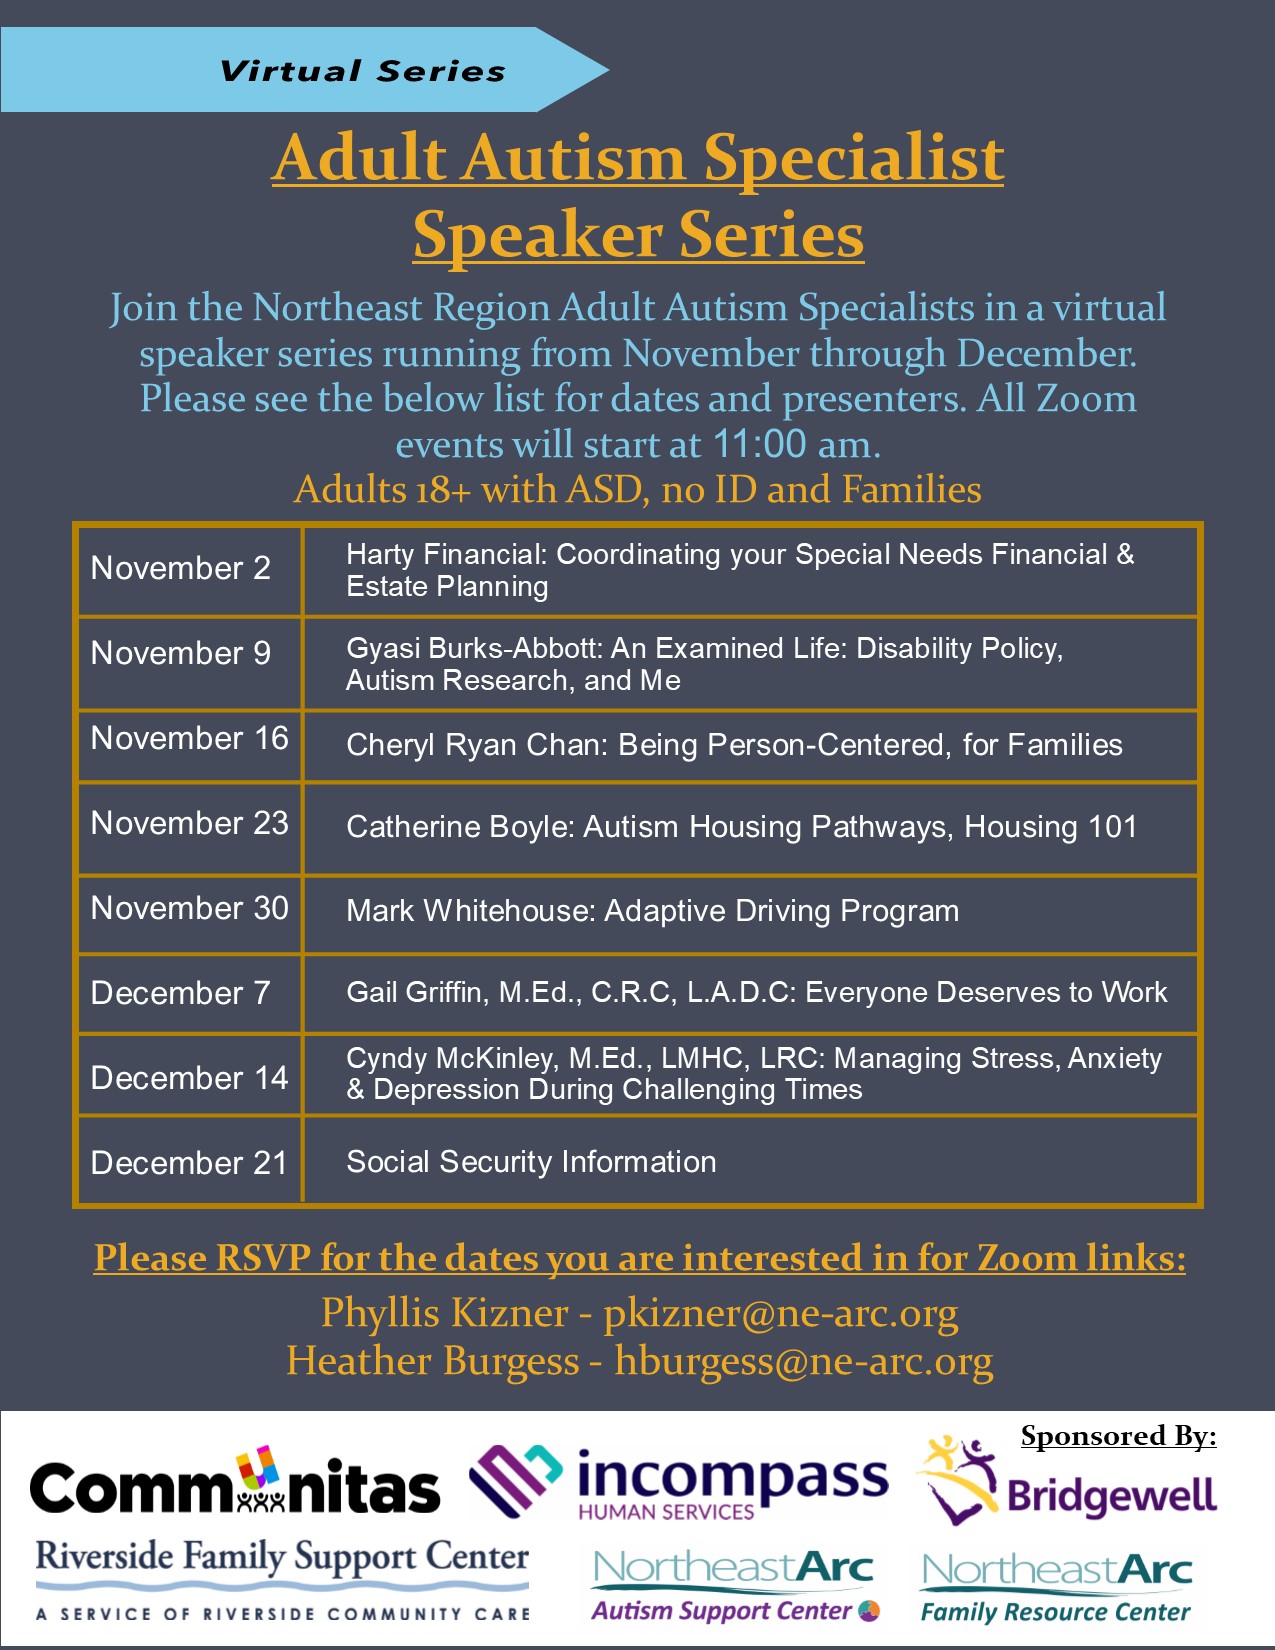 Adult Autism Speaker Series, Mondays at 11am through November and December, RSVP with pkizner@ne-arc.org